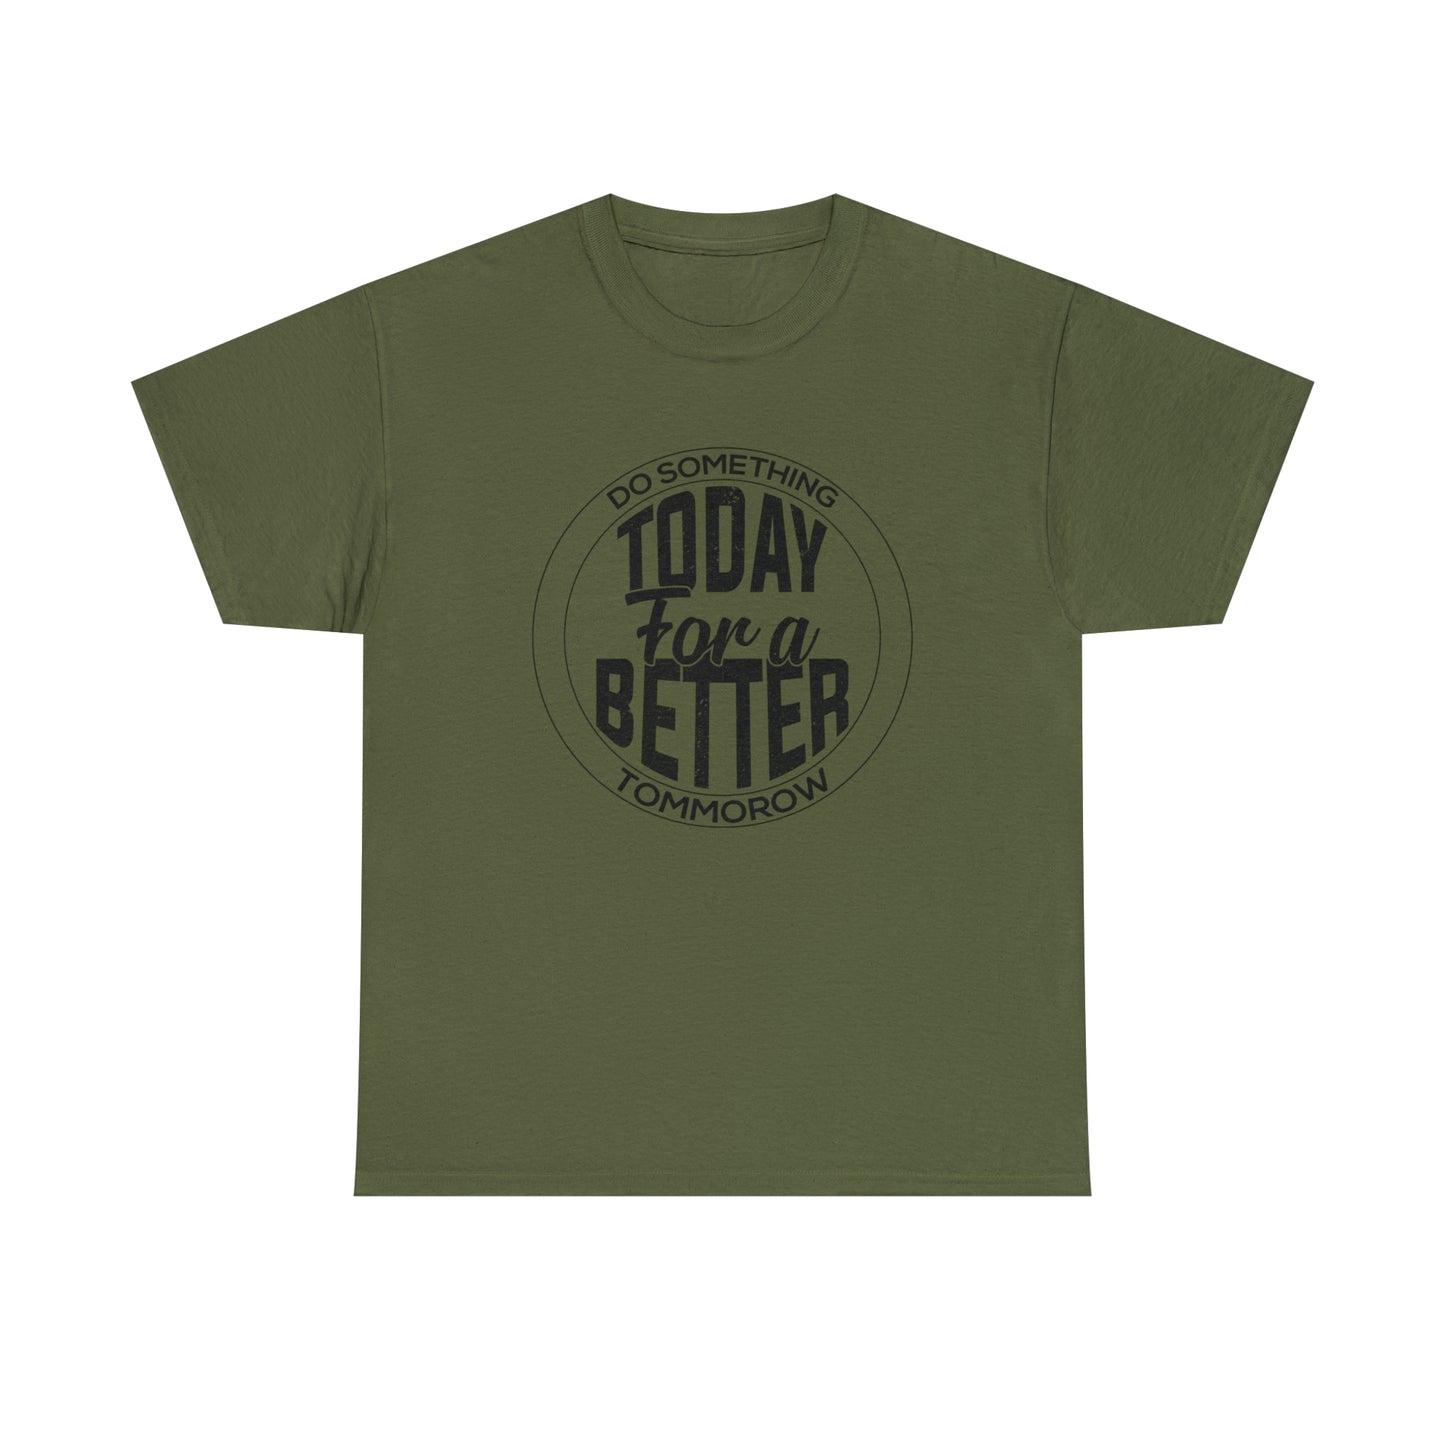 Inspirational T-Shirt For Motivational TShirt For Betterment T Shirt For Do Good Shirt For Better Tomorrow Shirt